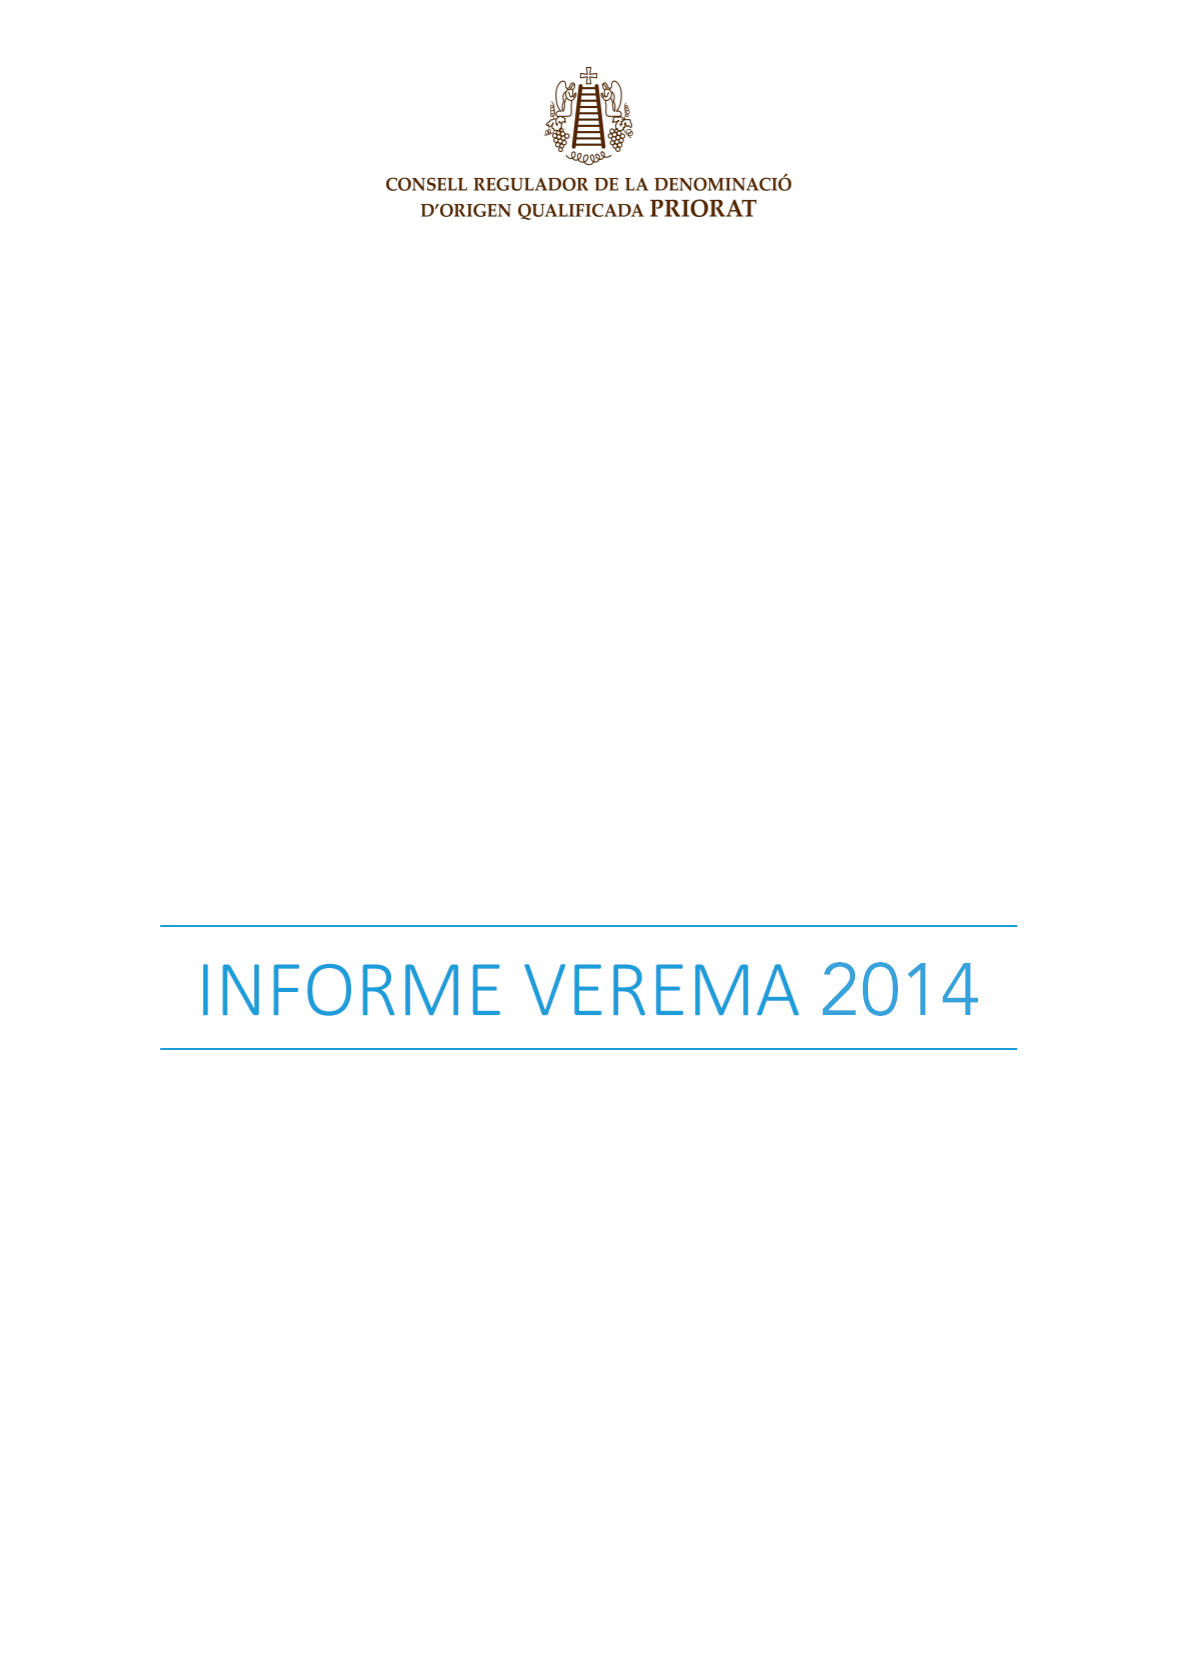 Informe de verema 2014